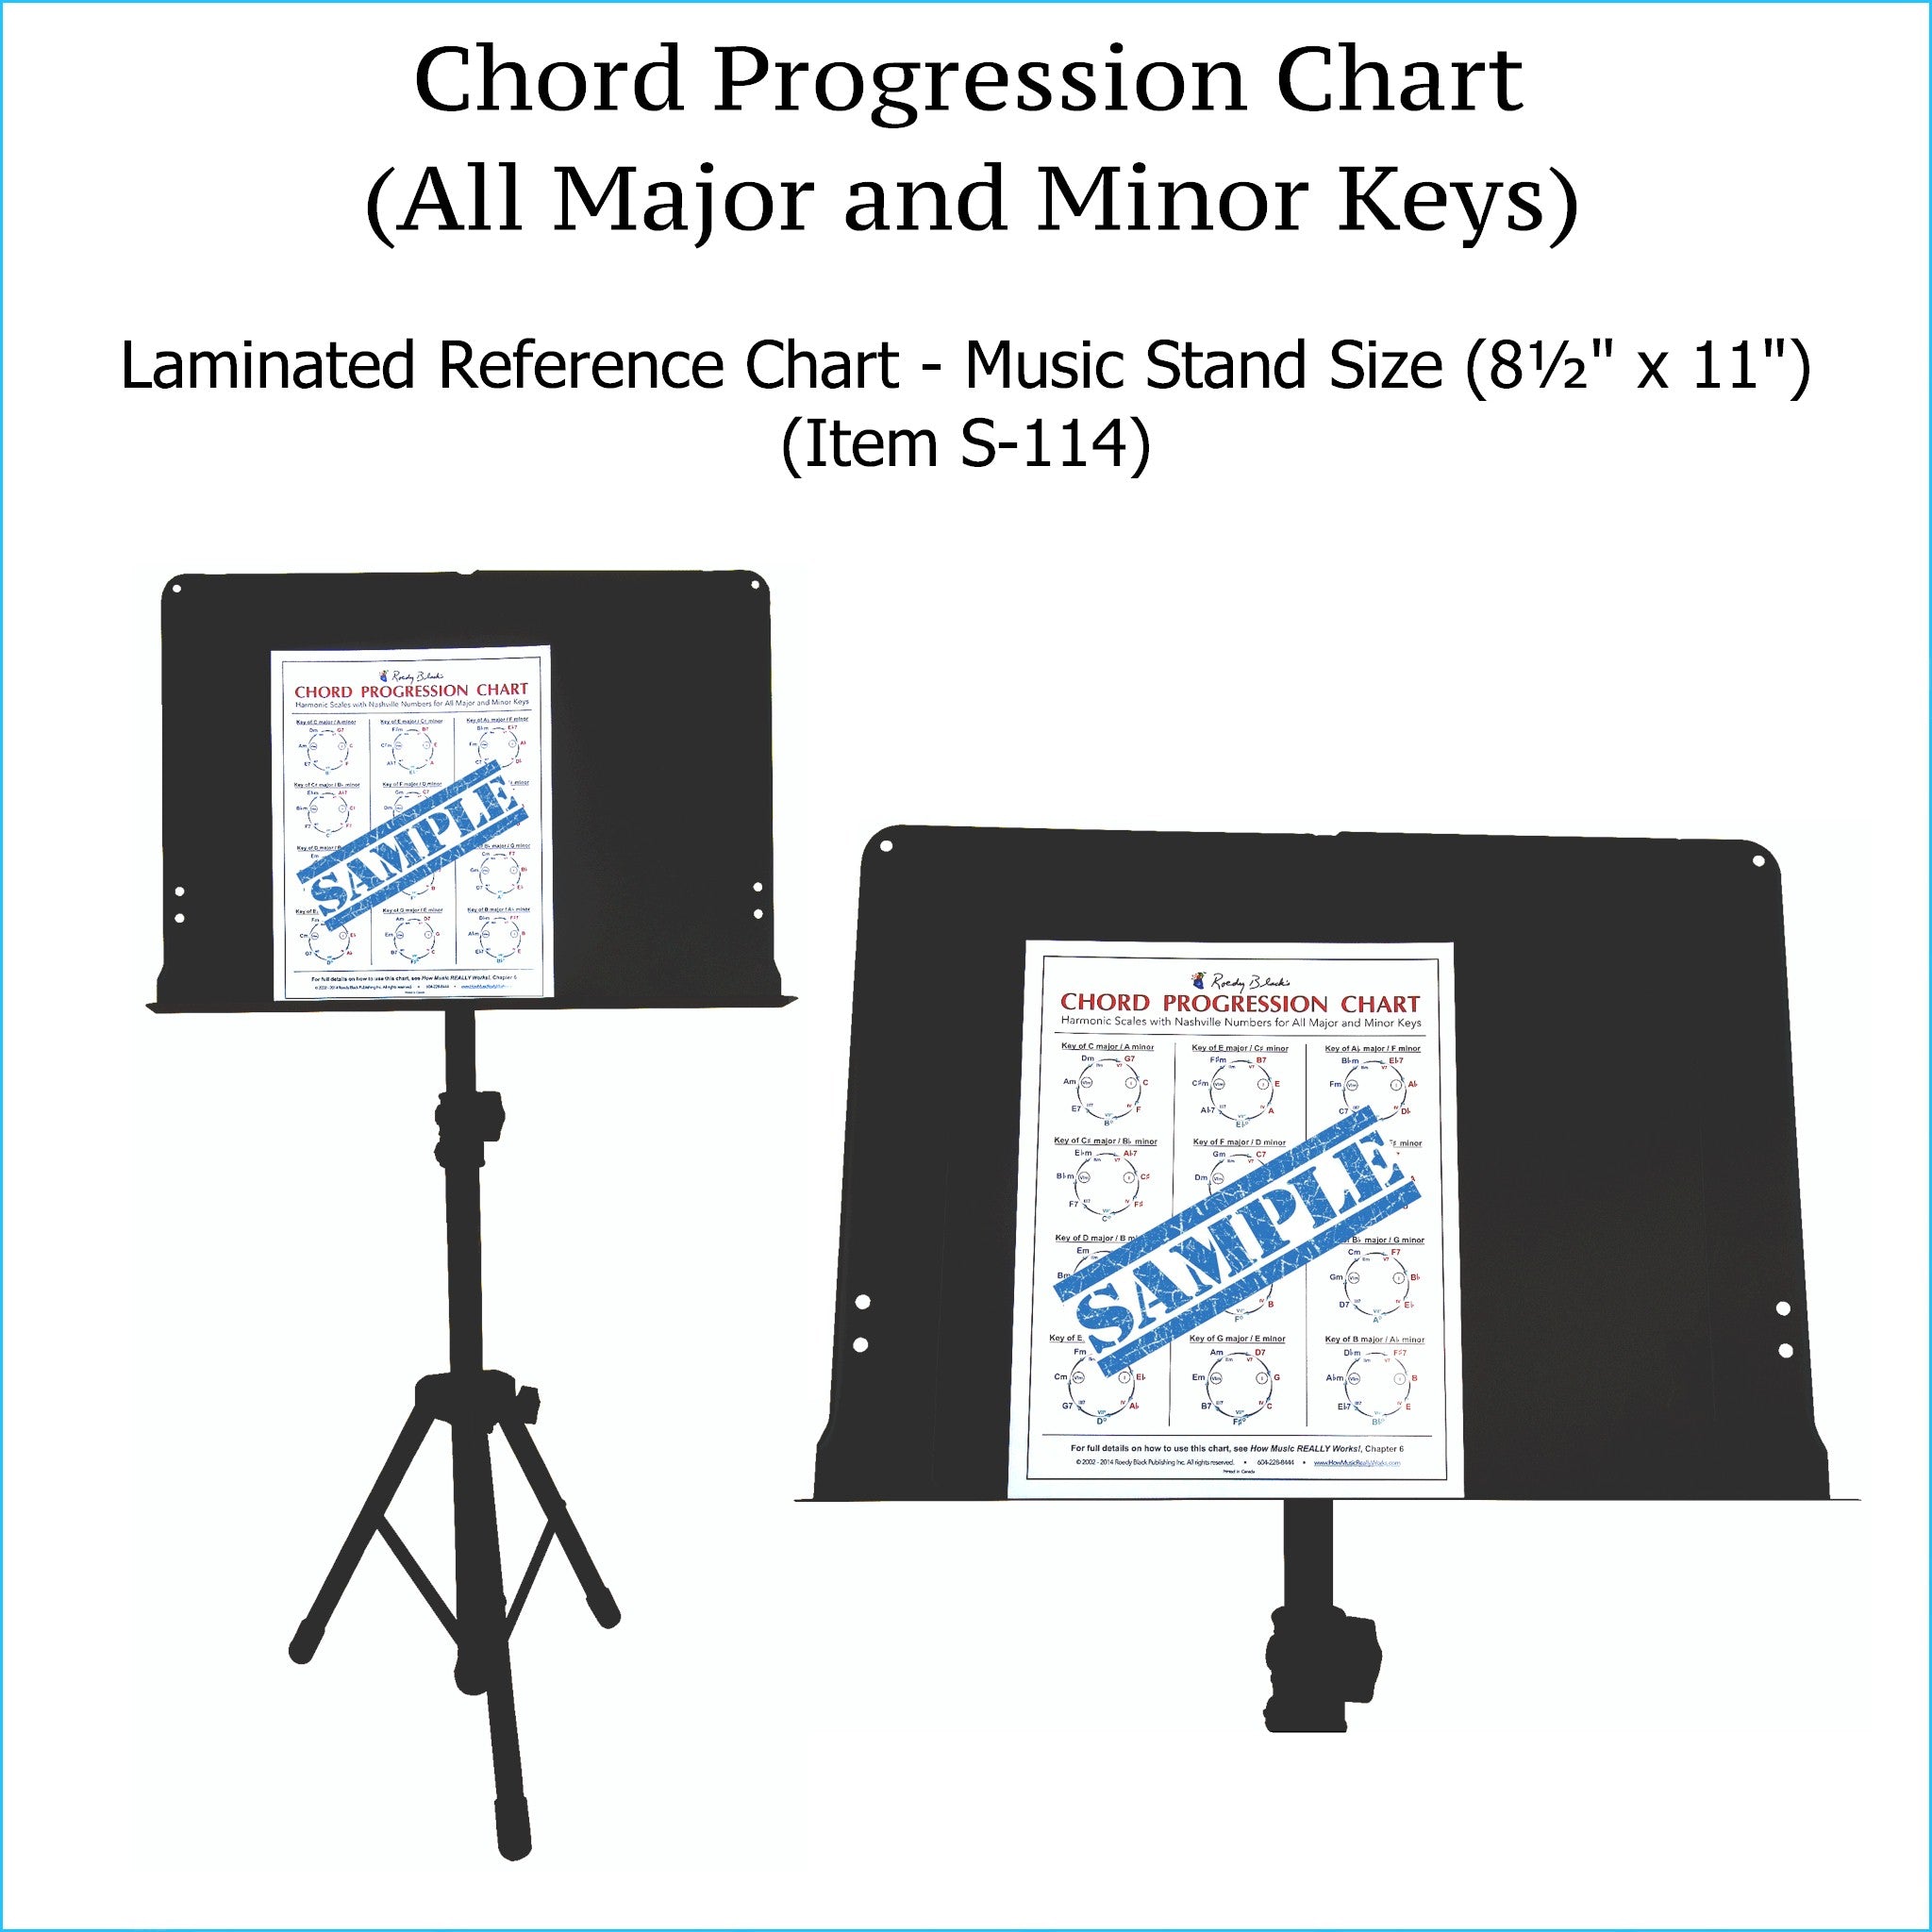 Chord progression chart, music stand size.